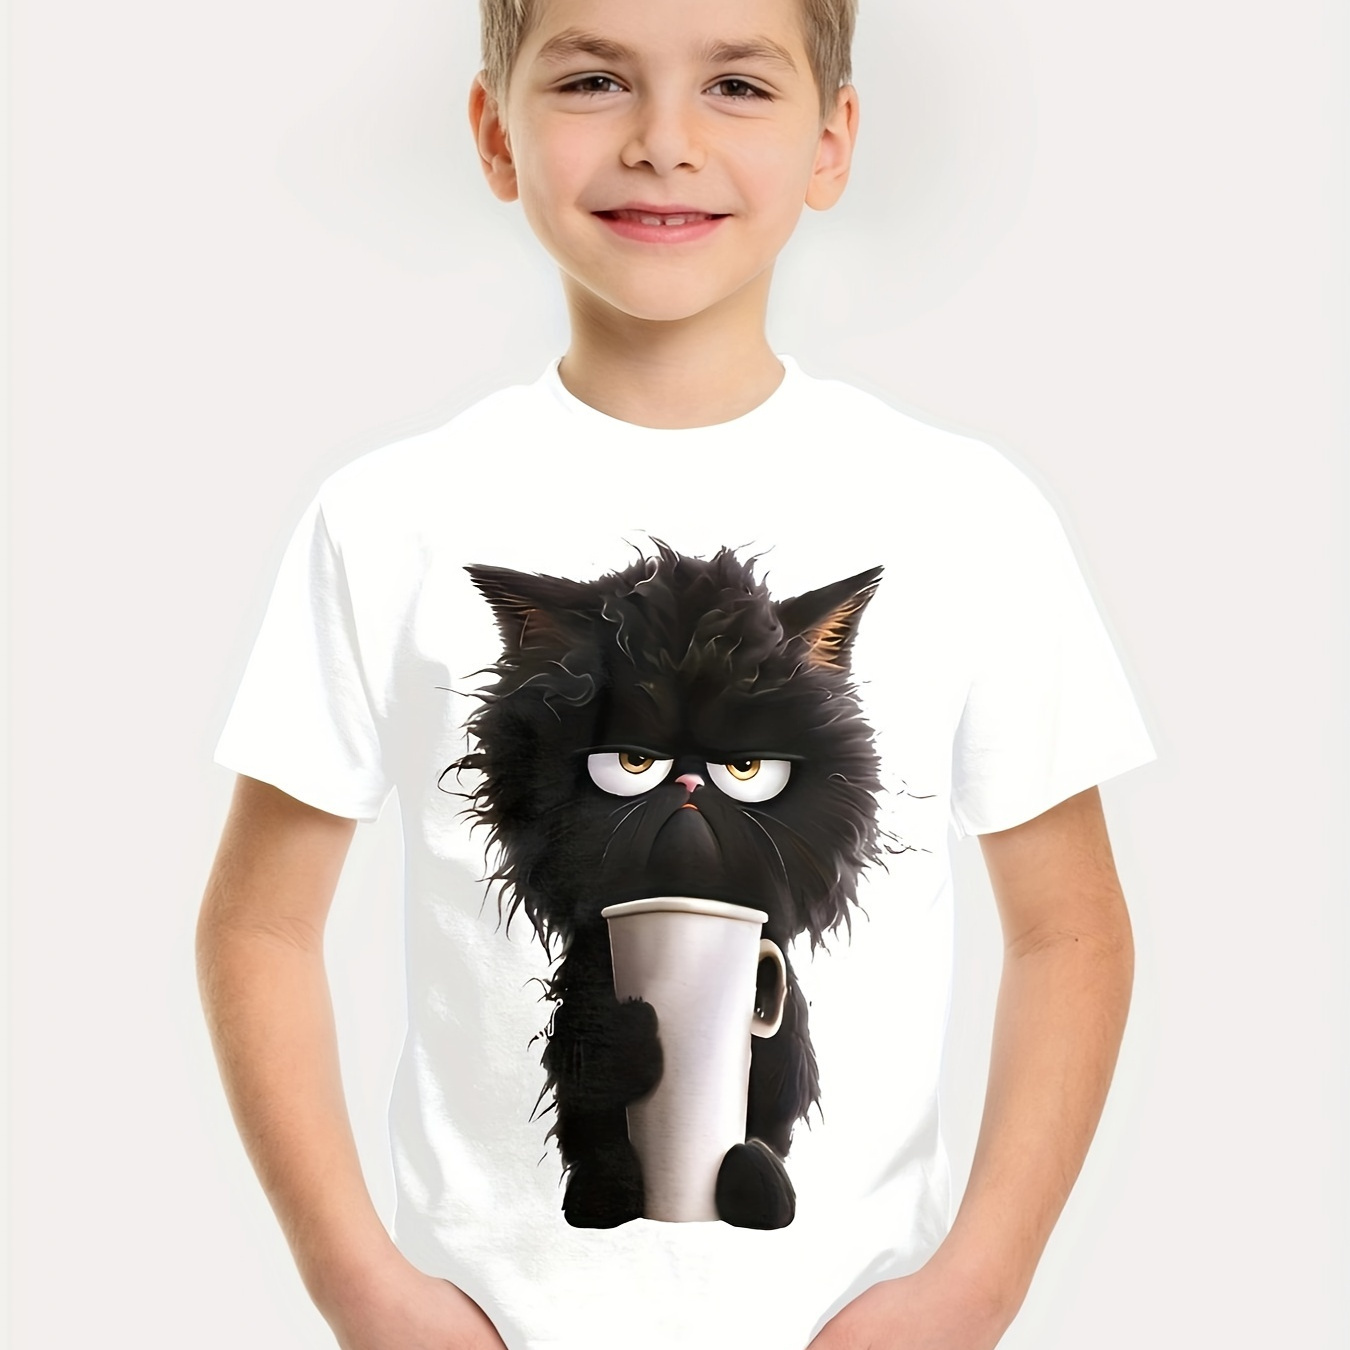 

Funny Black Cat Drinking Tea 3d Print Boys Creative T-shirt, Casual Lightweight Comfy Short Sleeve Tee Tops, Boys Clothes For Summer